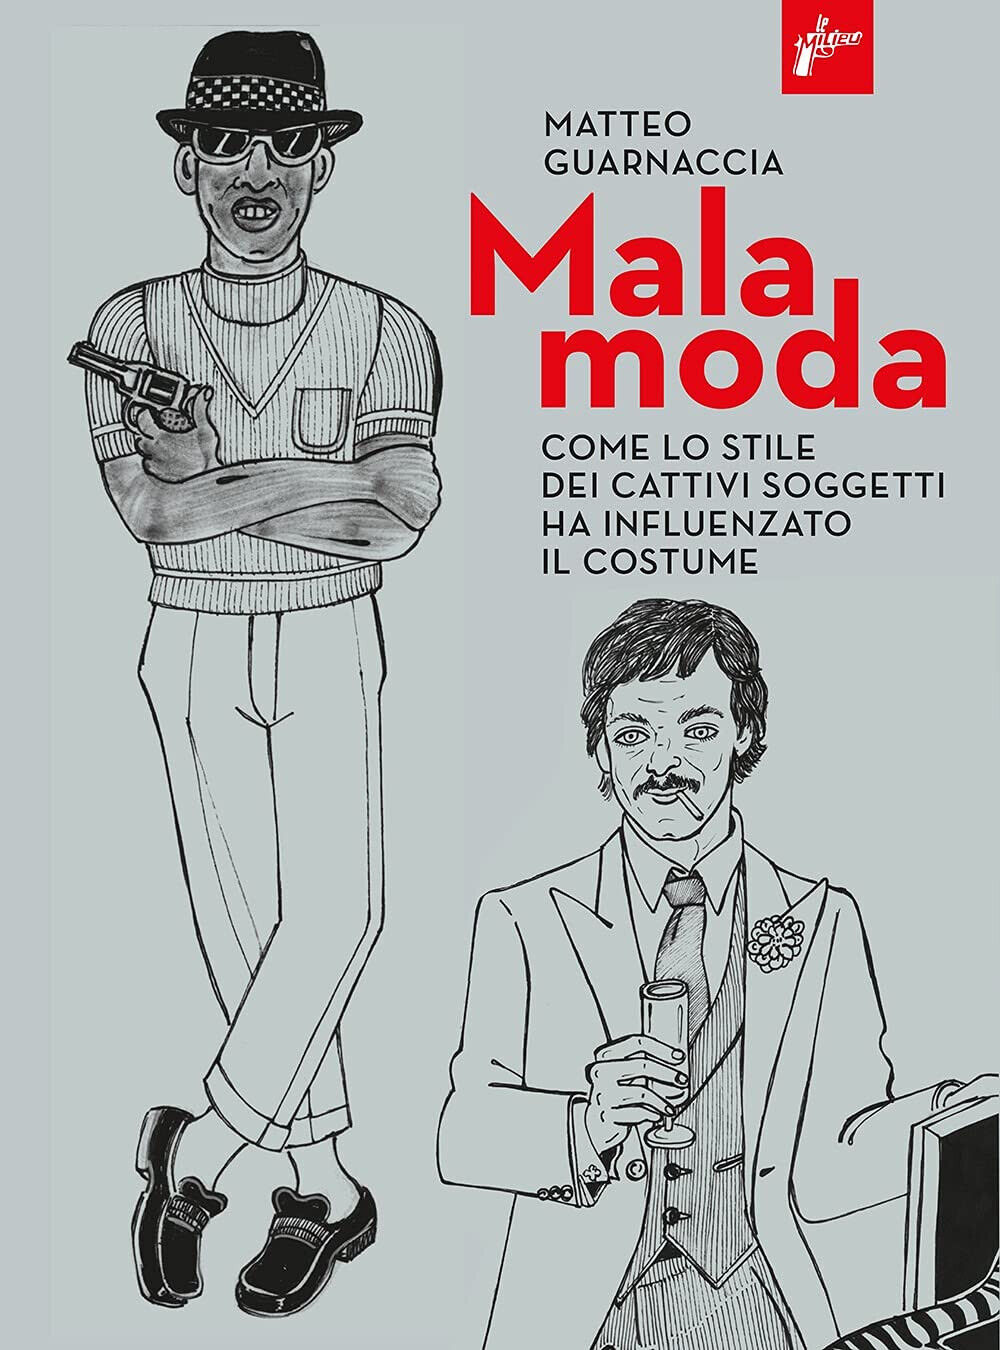 Malamoda - Matteo Guarnaccia - Milieu, 2021